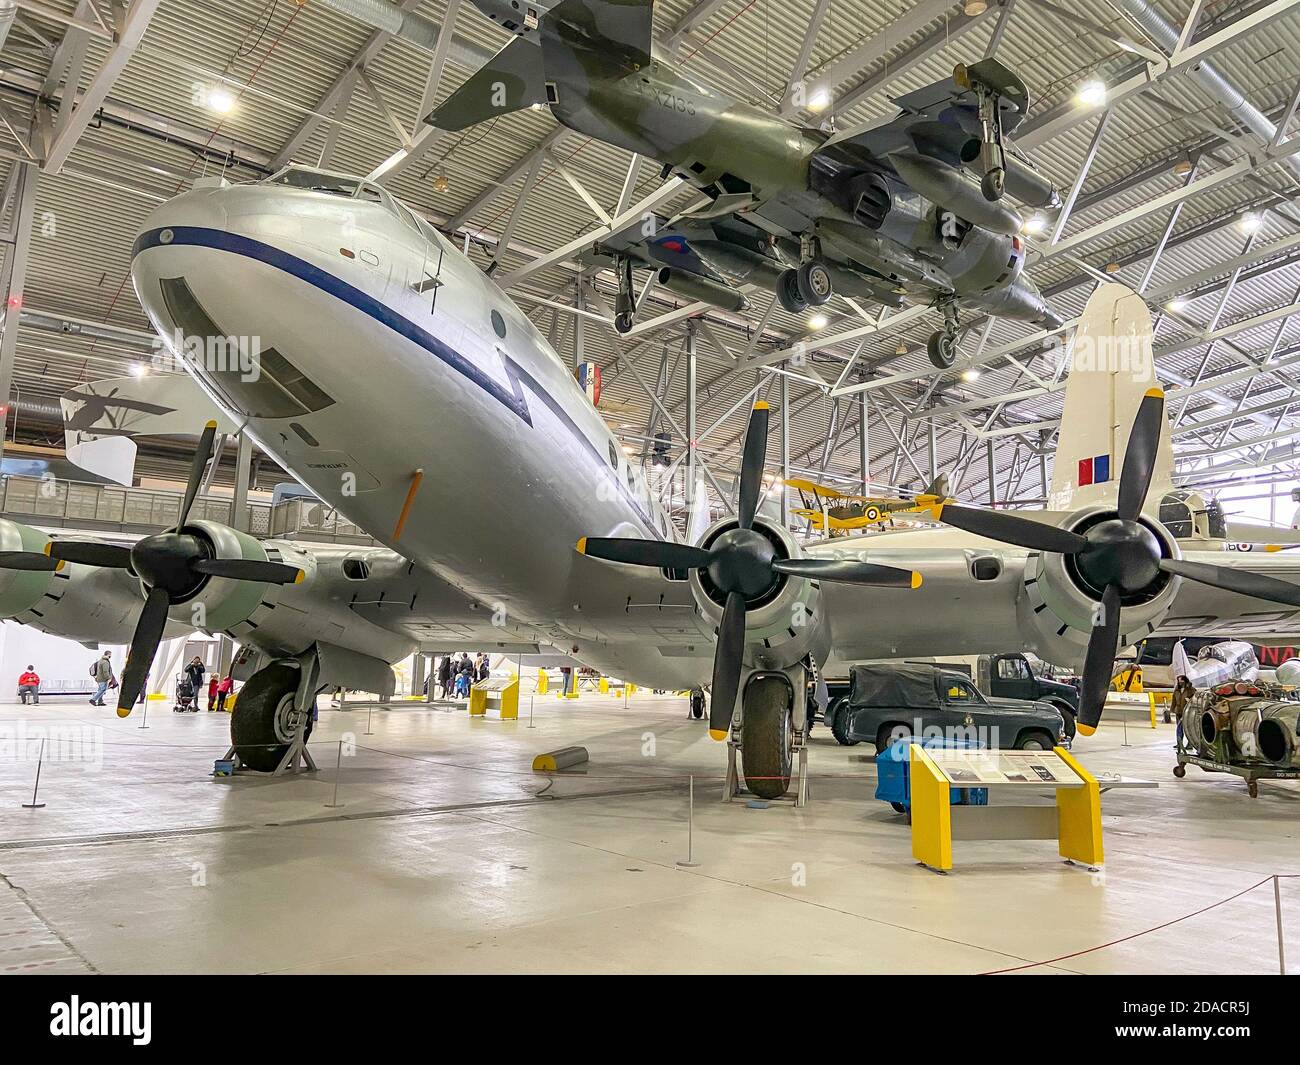 The Aircraft Hall at IWM Duxford, Duxford Airfield, Duxford, Cambridgeshire, England, United Kingdom Stock Photo